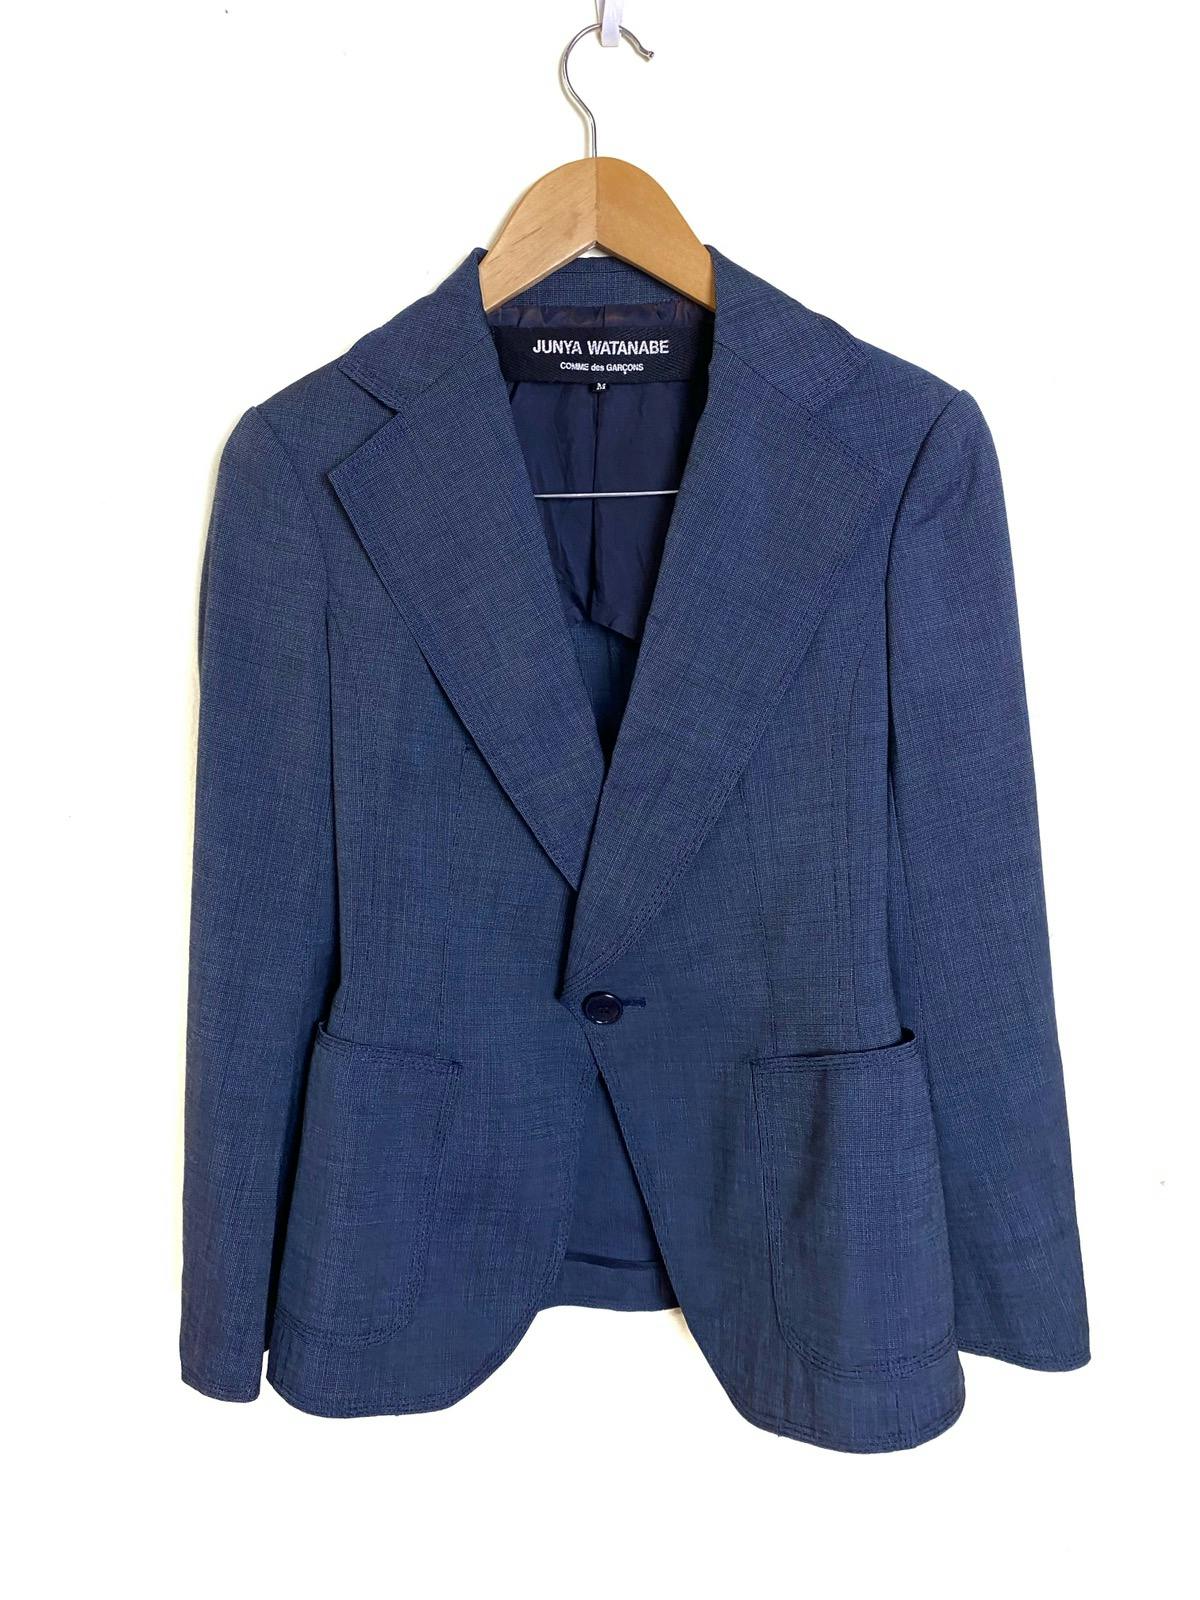 Comme Des Garcons Junya Watanabe Slim Suit Jacket Coat AD02 - 1